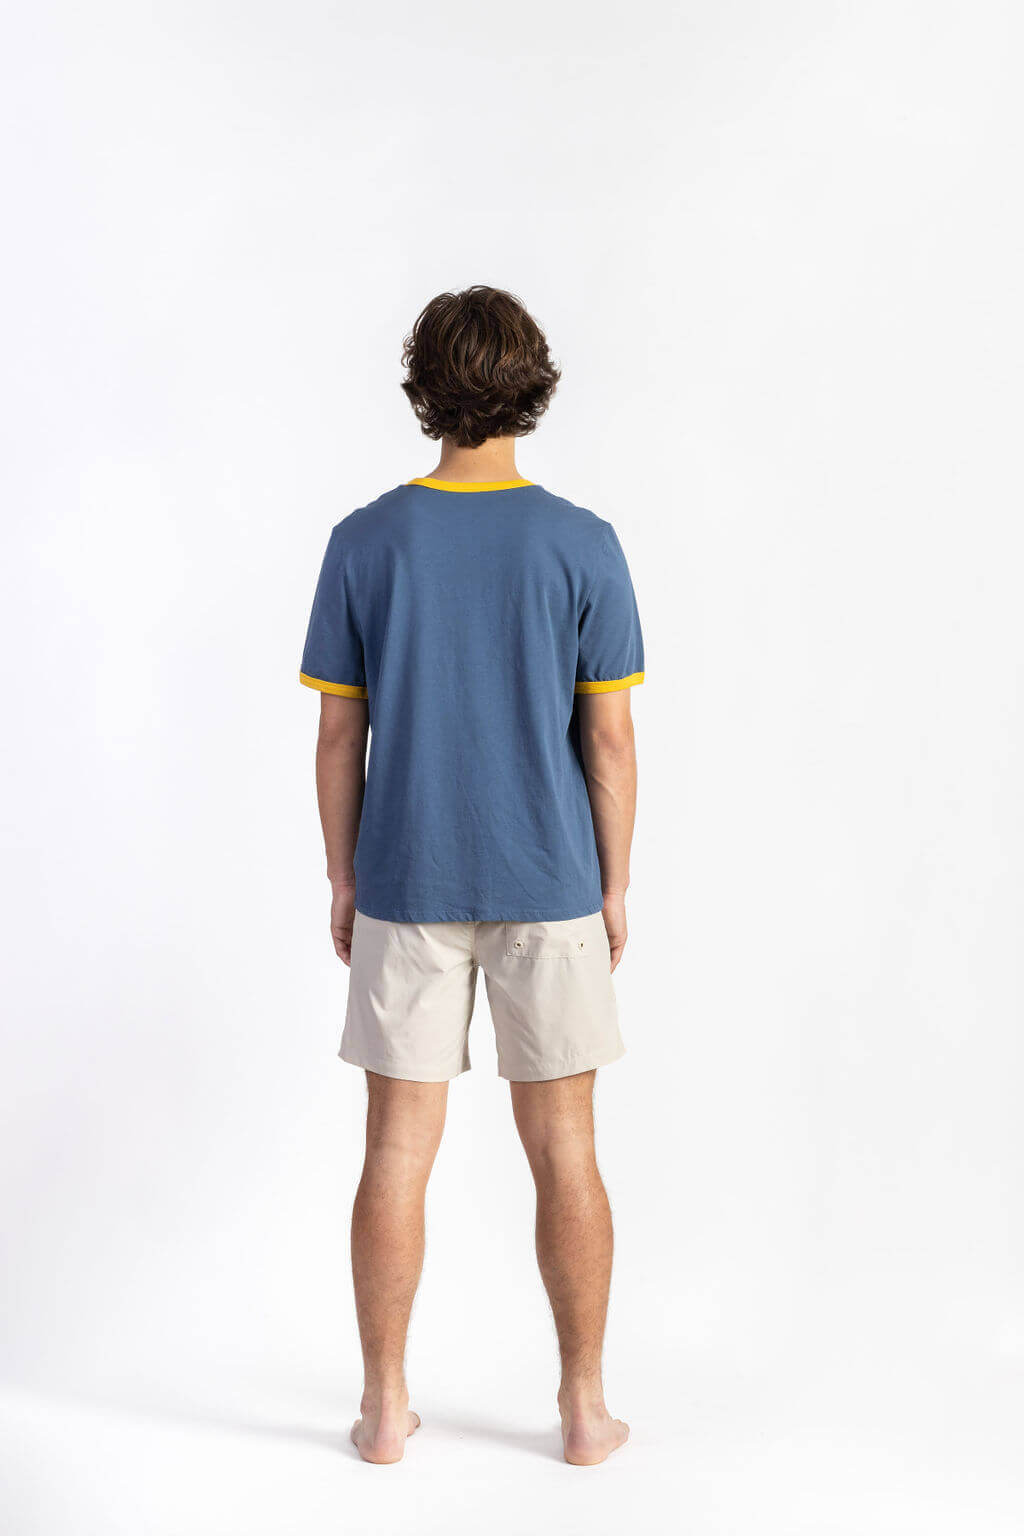 A man wearing a blue summer tee shirt having manana branding with white shorts